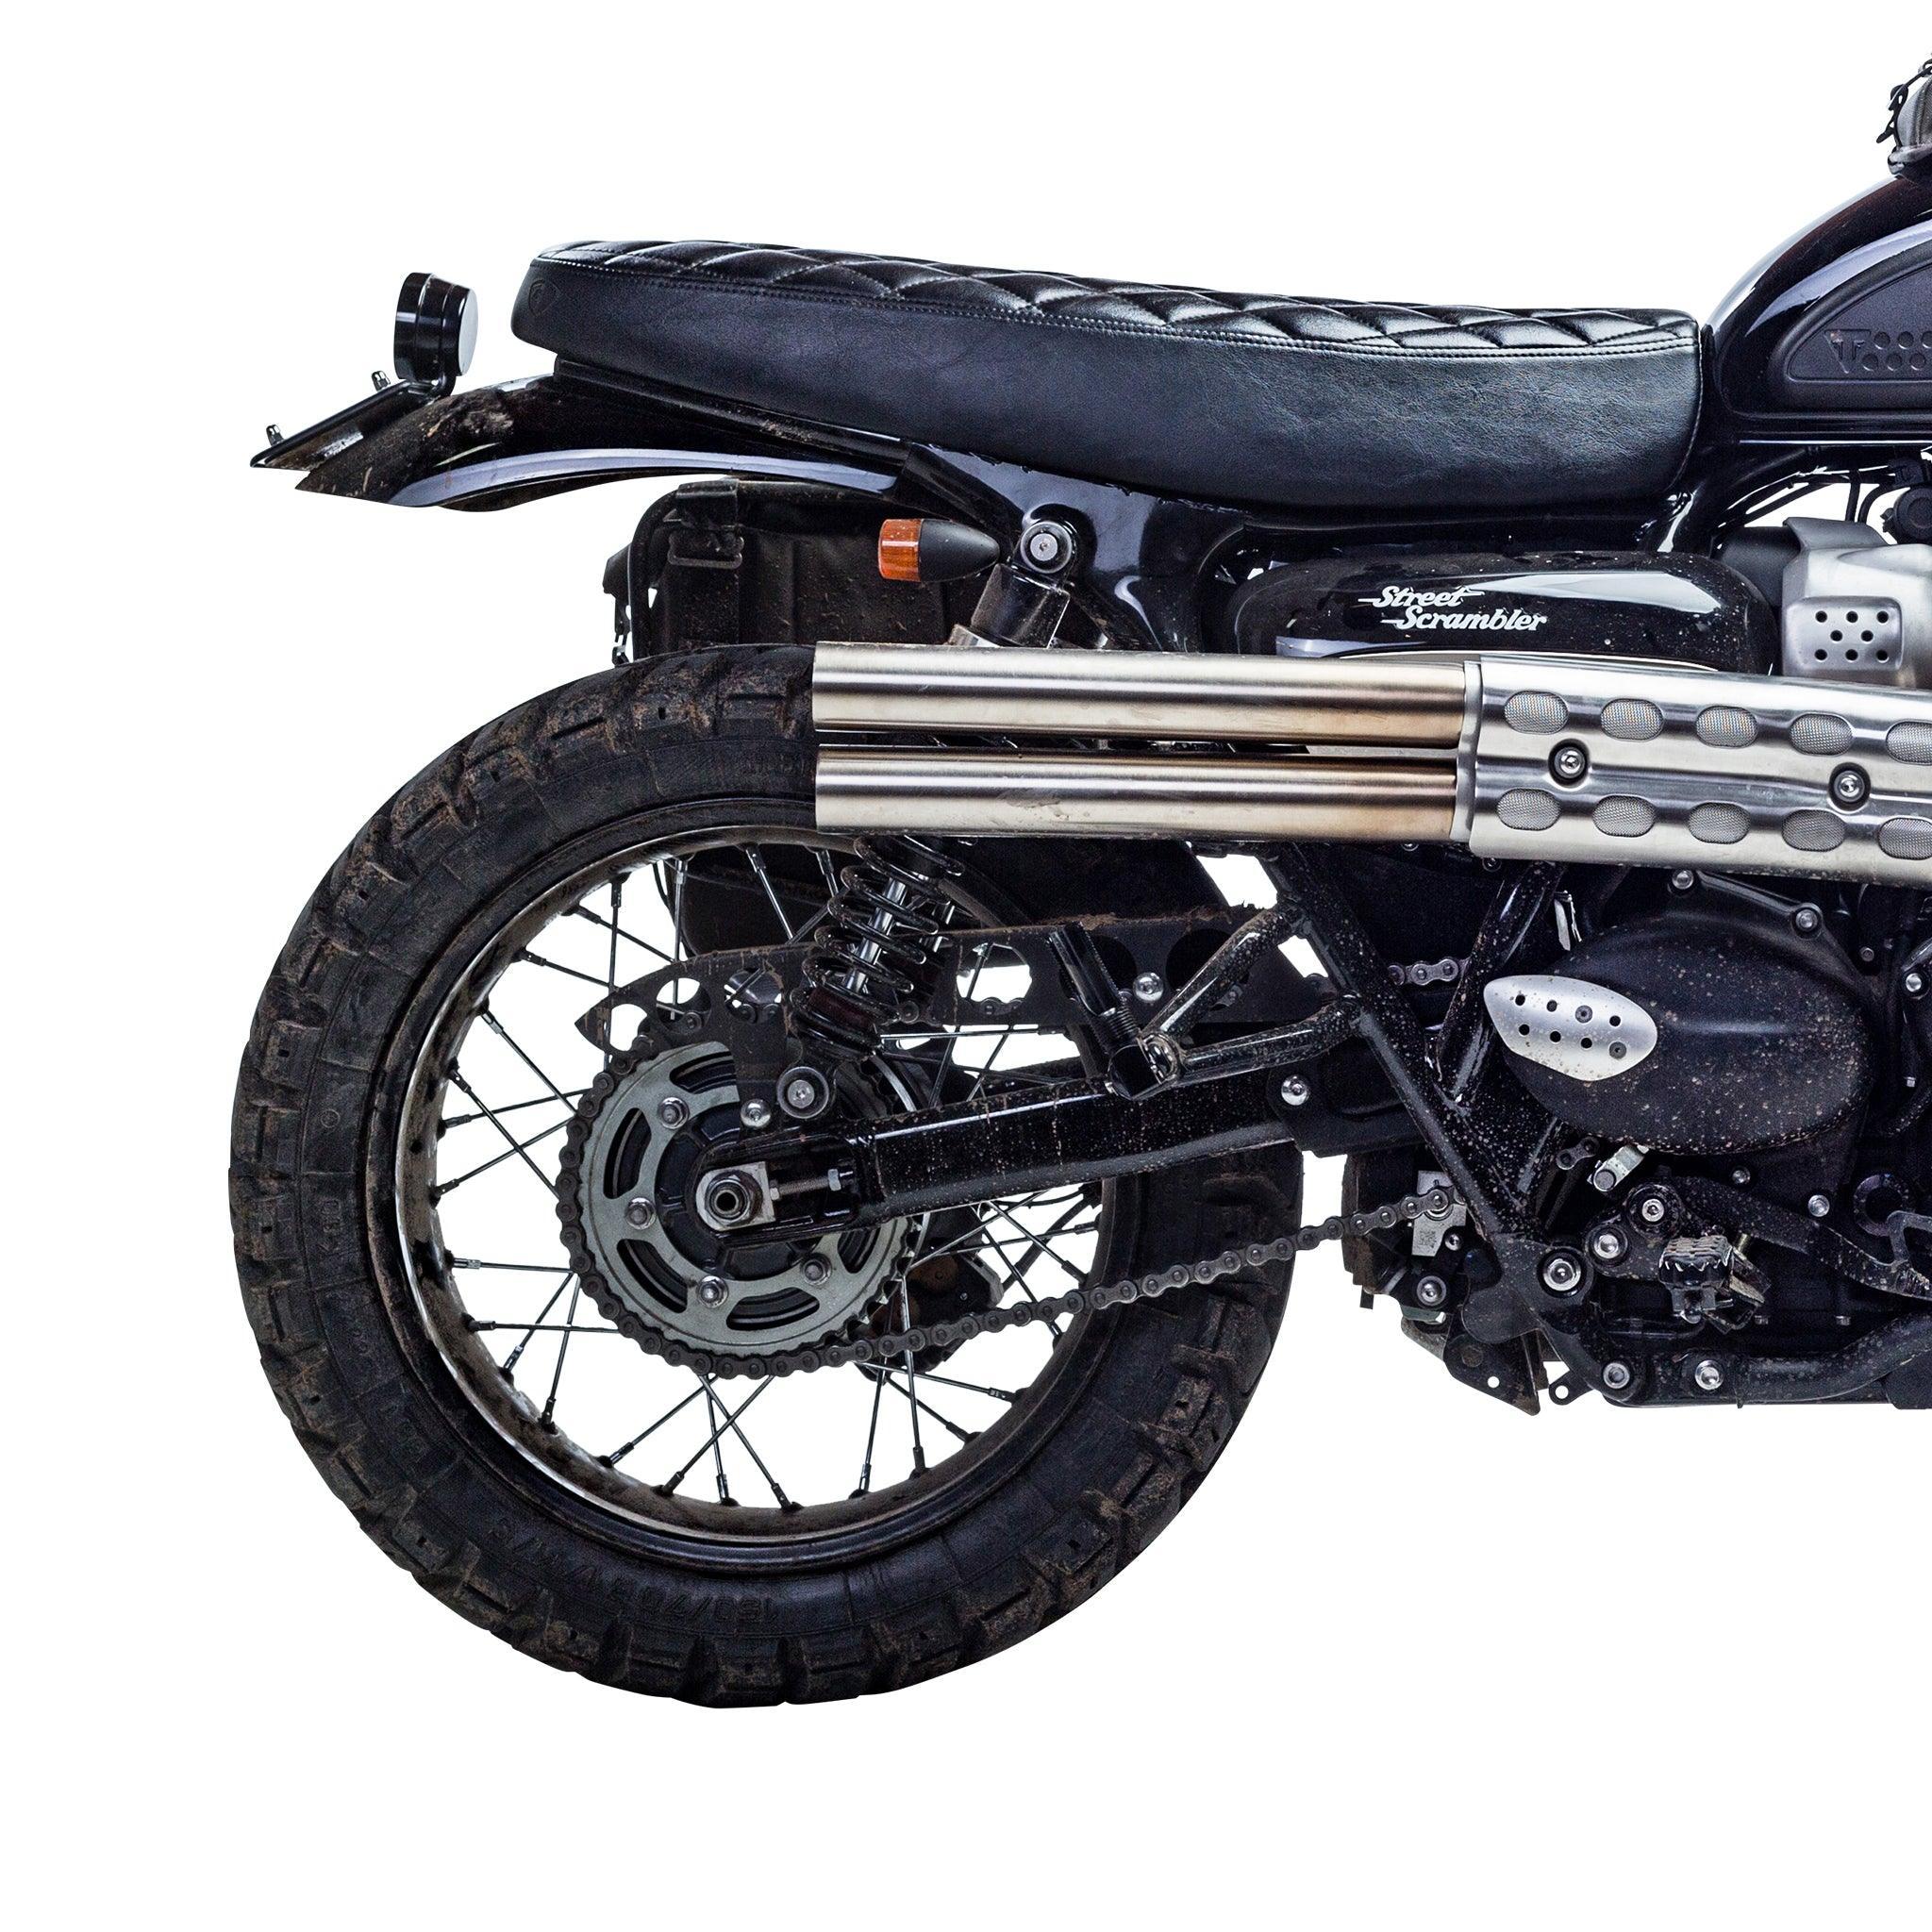 Slammer Tuck N Roll Gel Seat for Triumph Motorcycles - British Customs